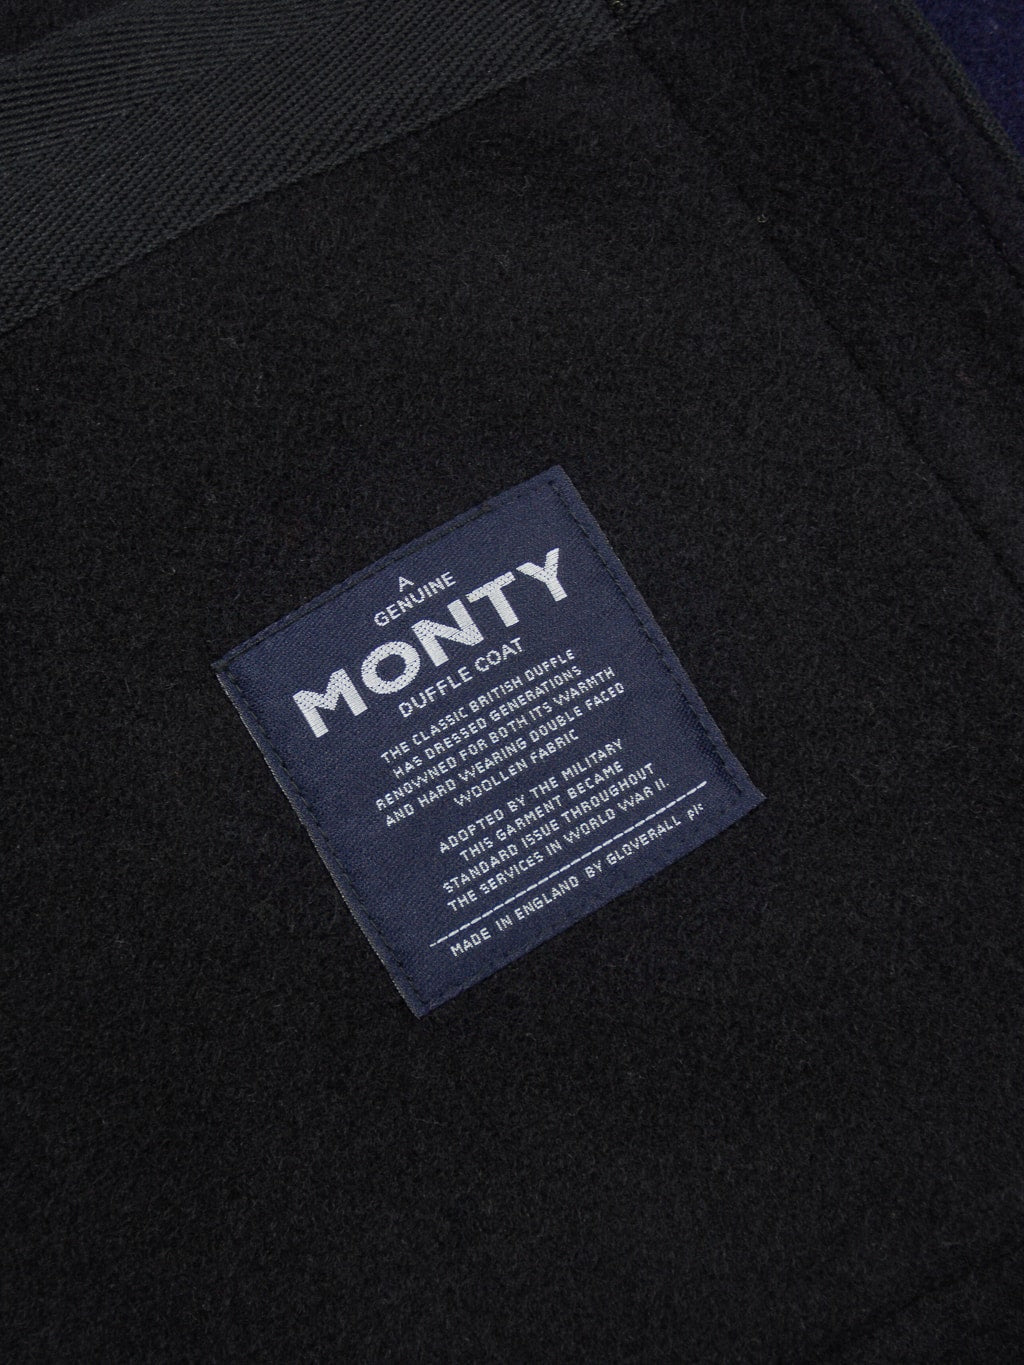 3sixteen x Gloverall Monty Duffle Coat black navy label